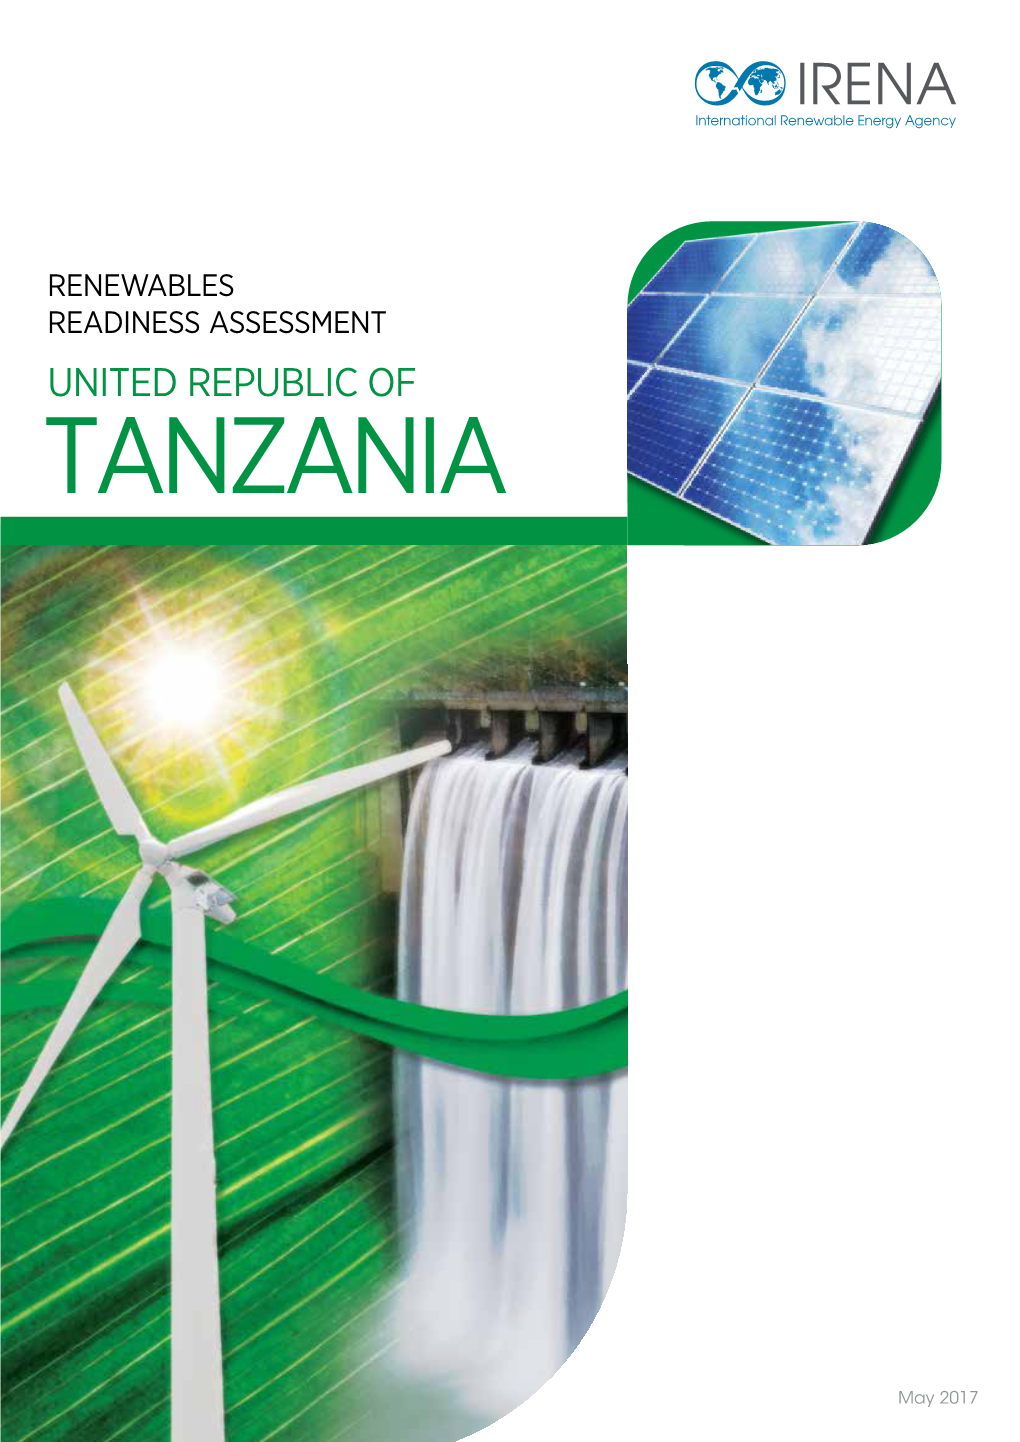 Renewables Readiness Assessment: United Republic of Tanzania, International Renewable Energy Agency, Abu Dhabi